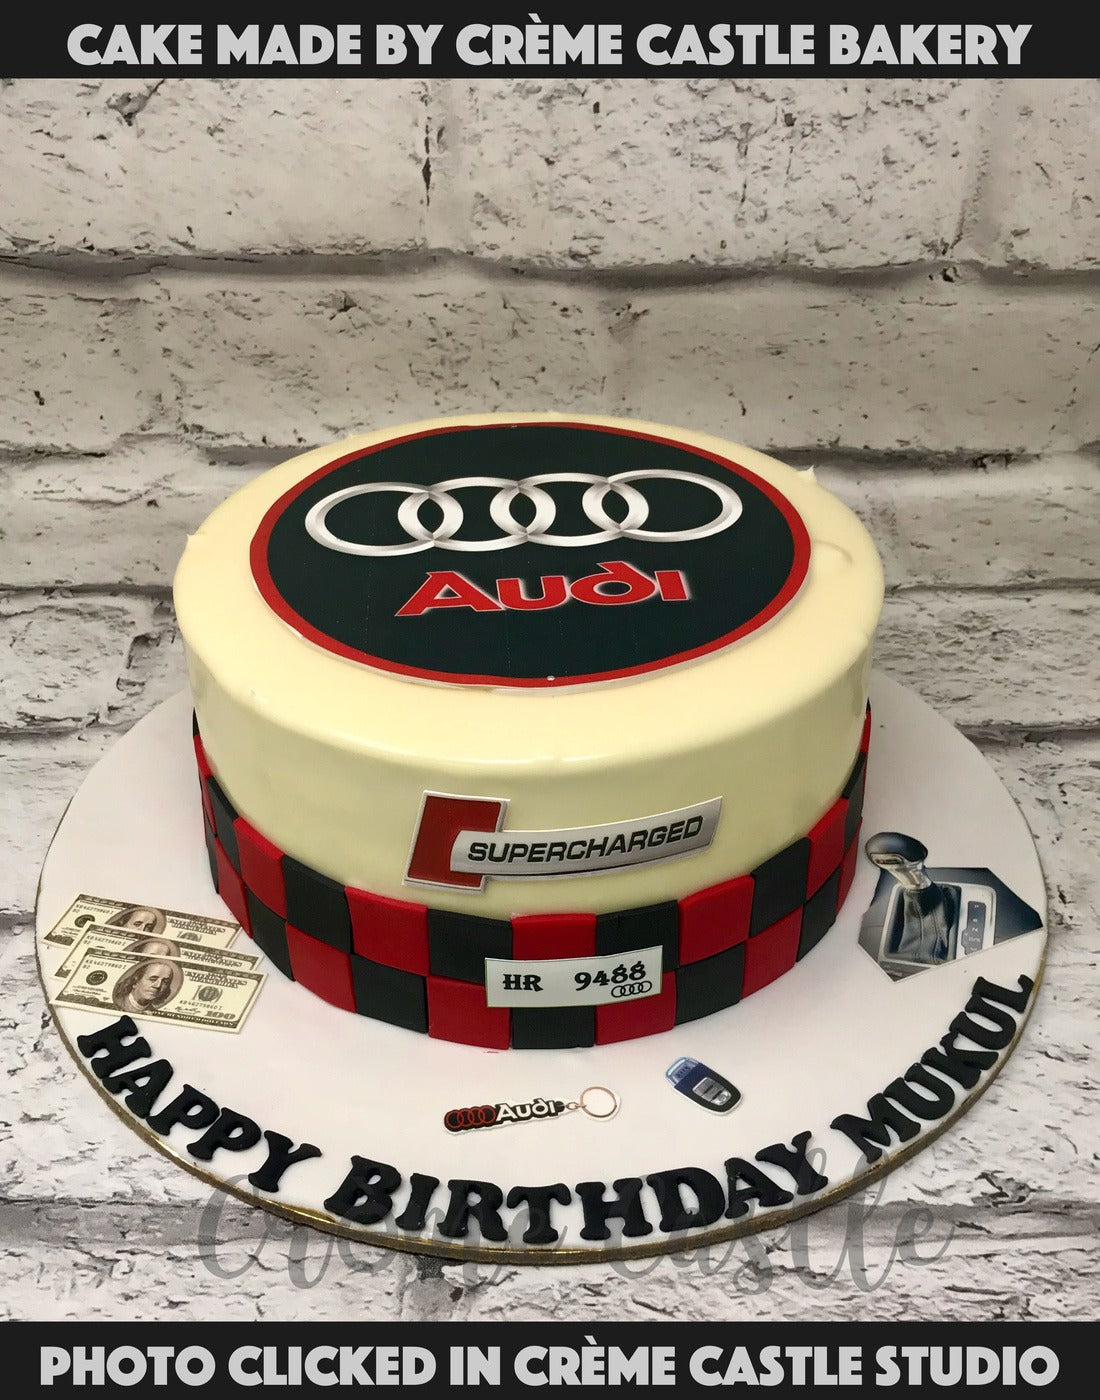 Audi car brand cake designs/Car cake ideas/Audi car cake decorating -  YouTube